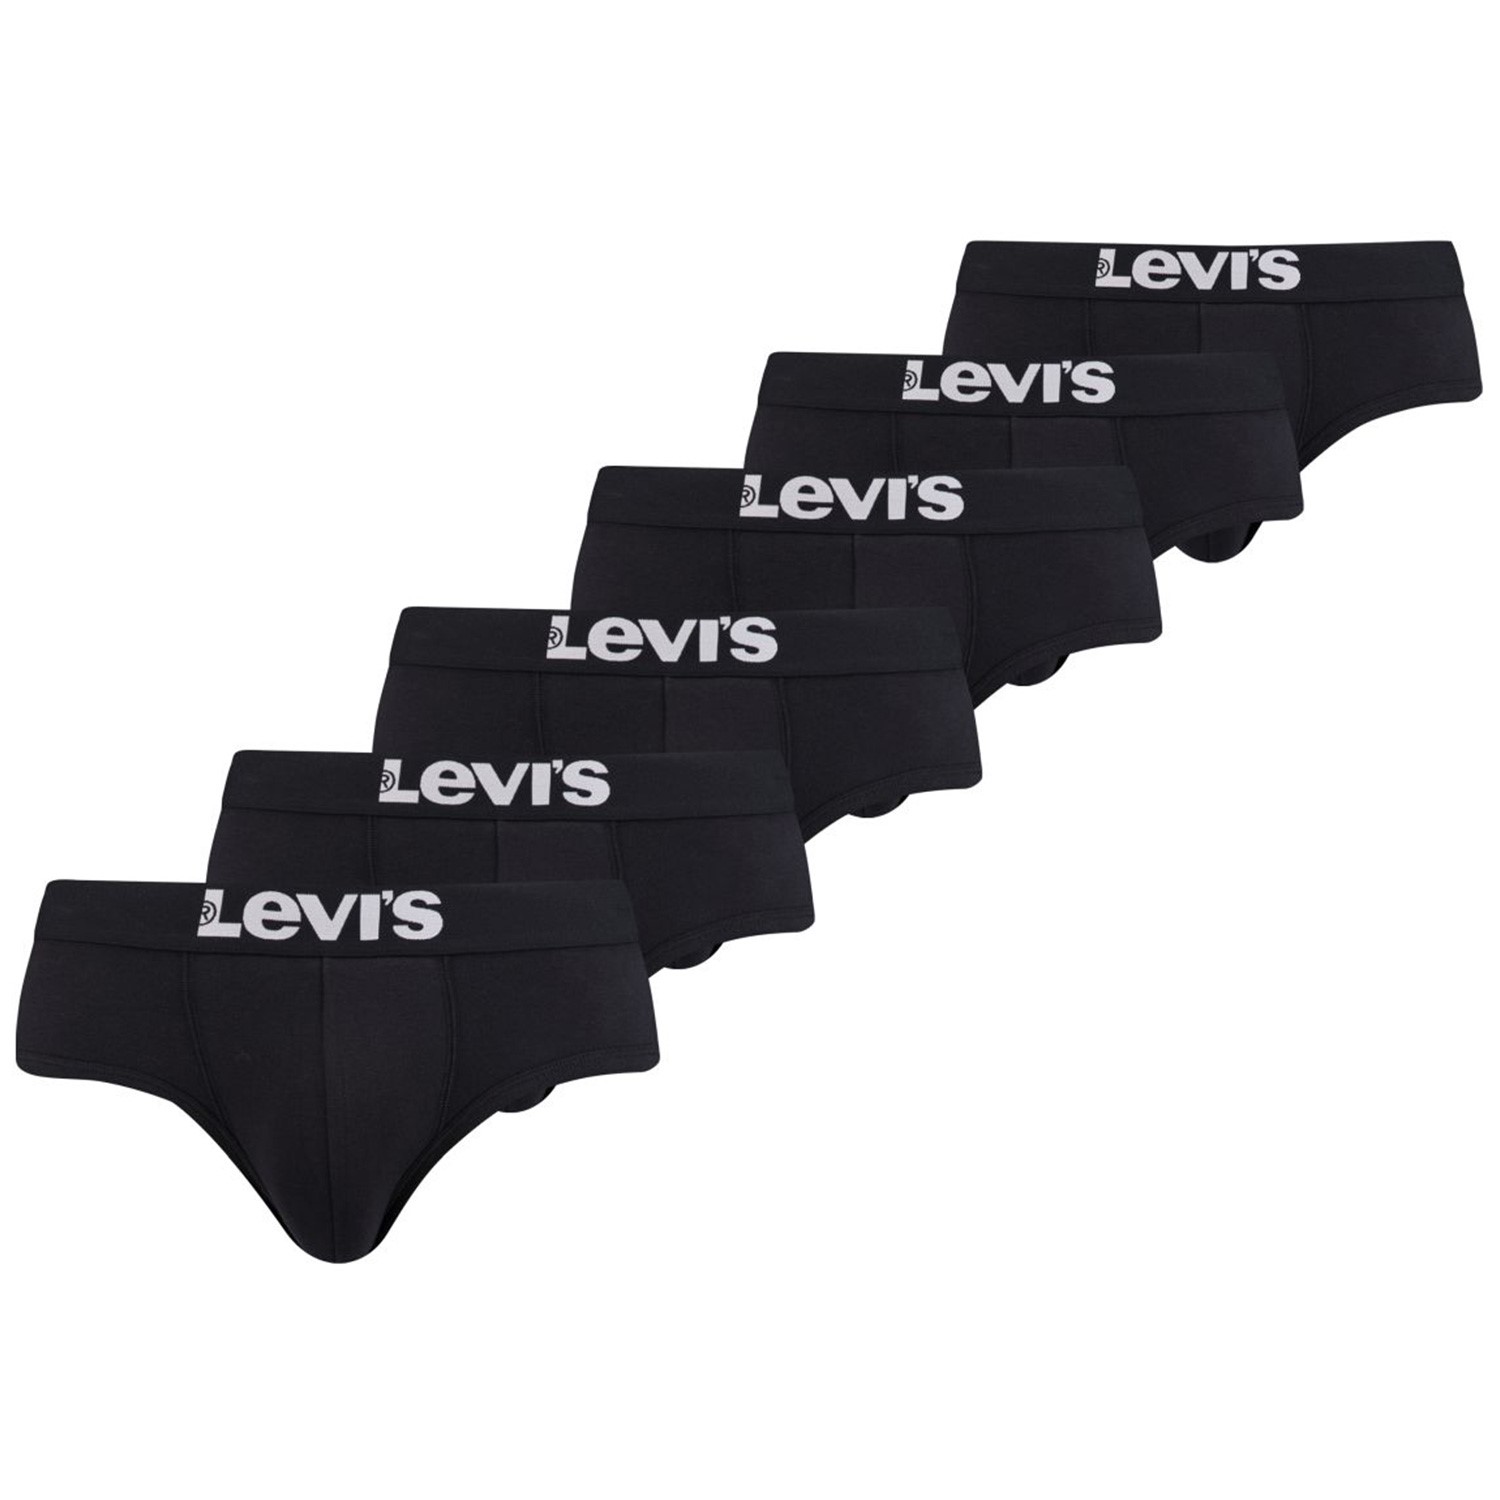 Levis Solid Basic Cotton Brief 